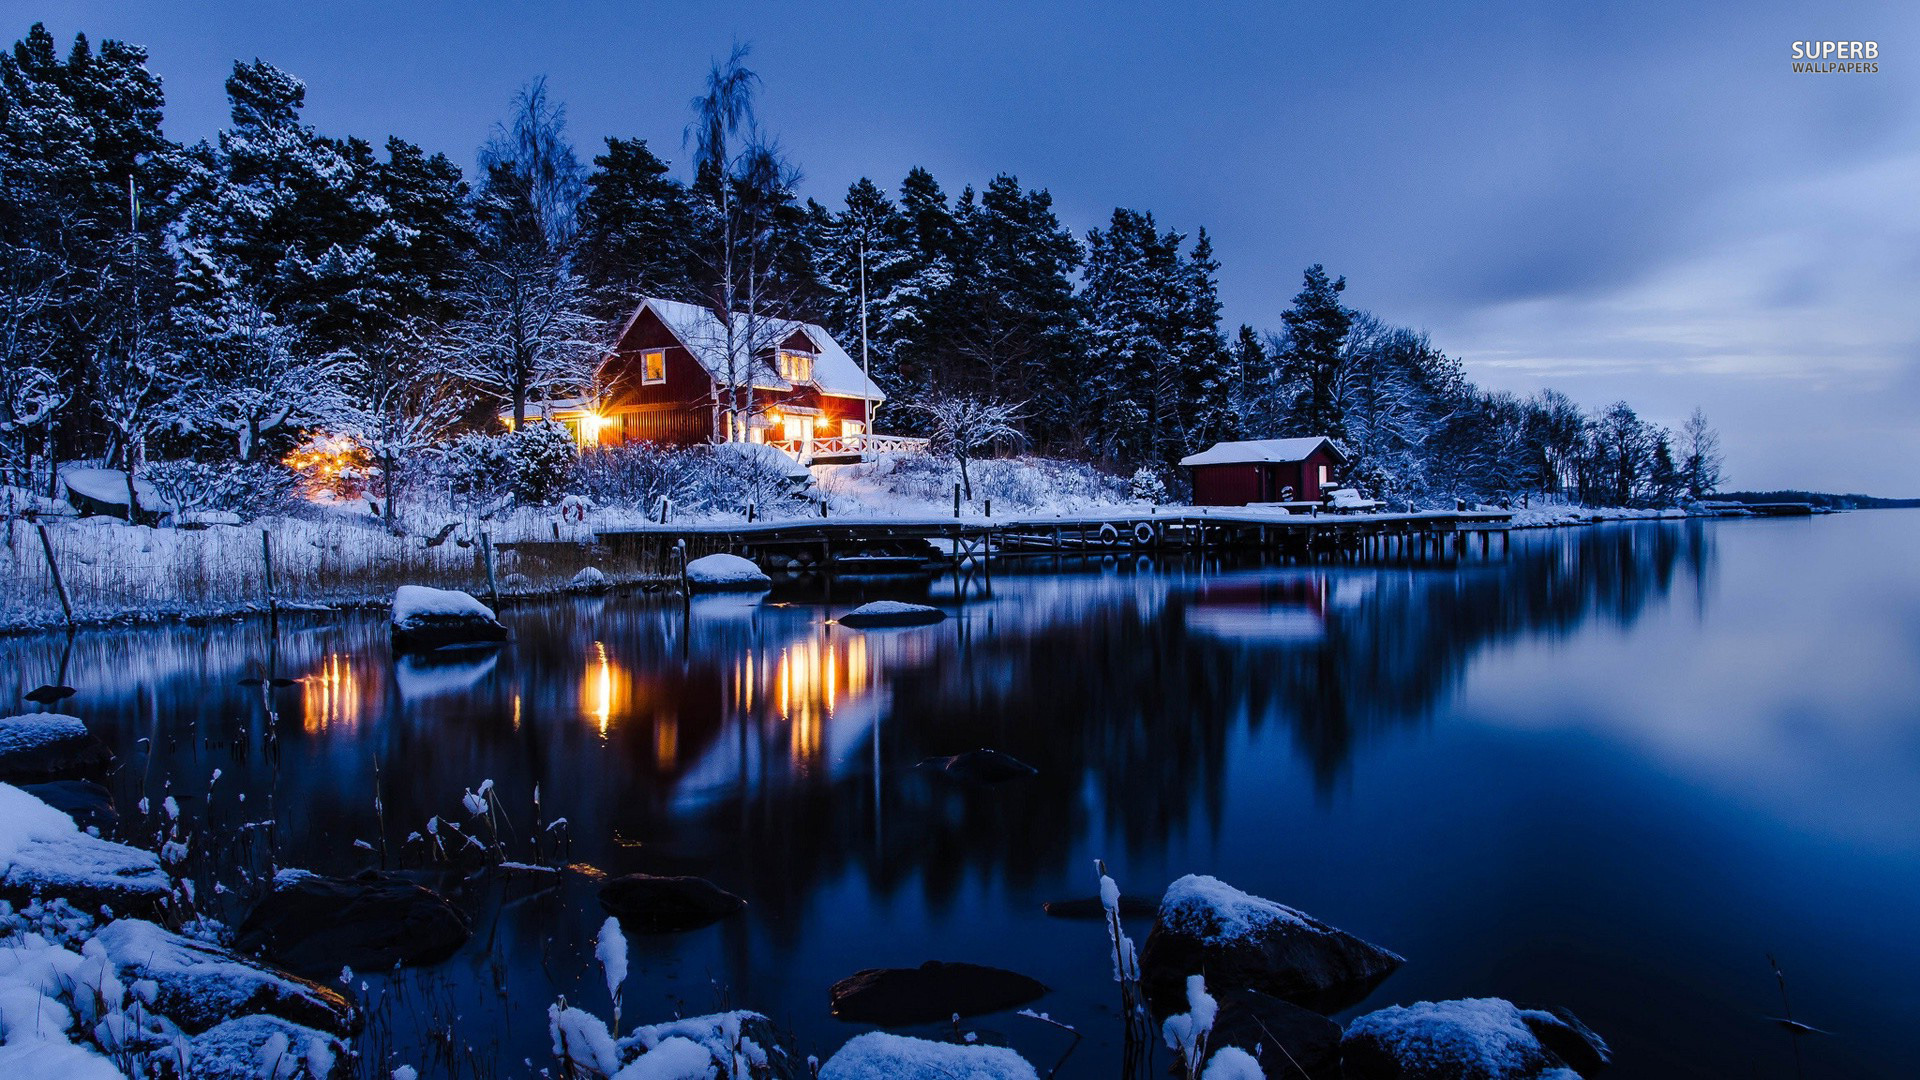 lakeside-winter-cabin-25436-1920x1080.jpg